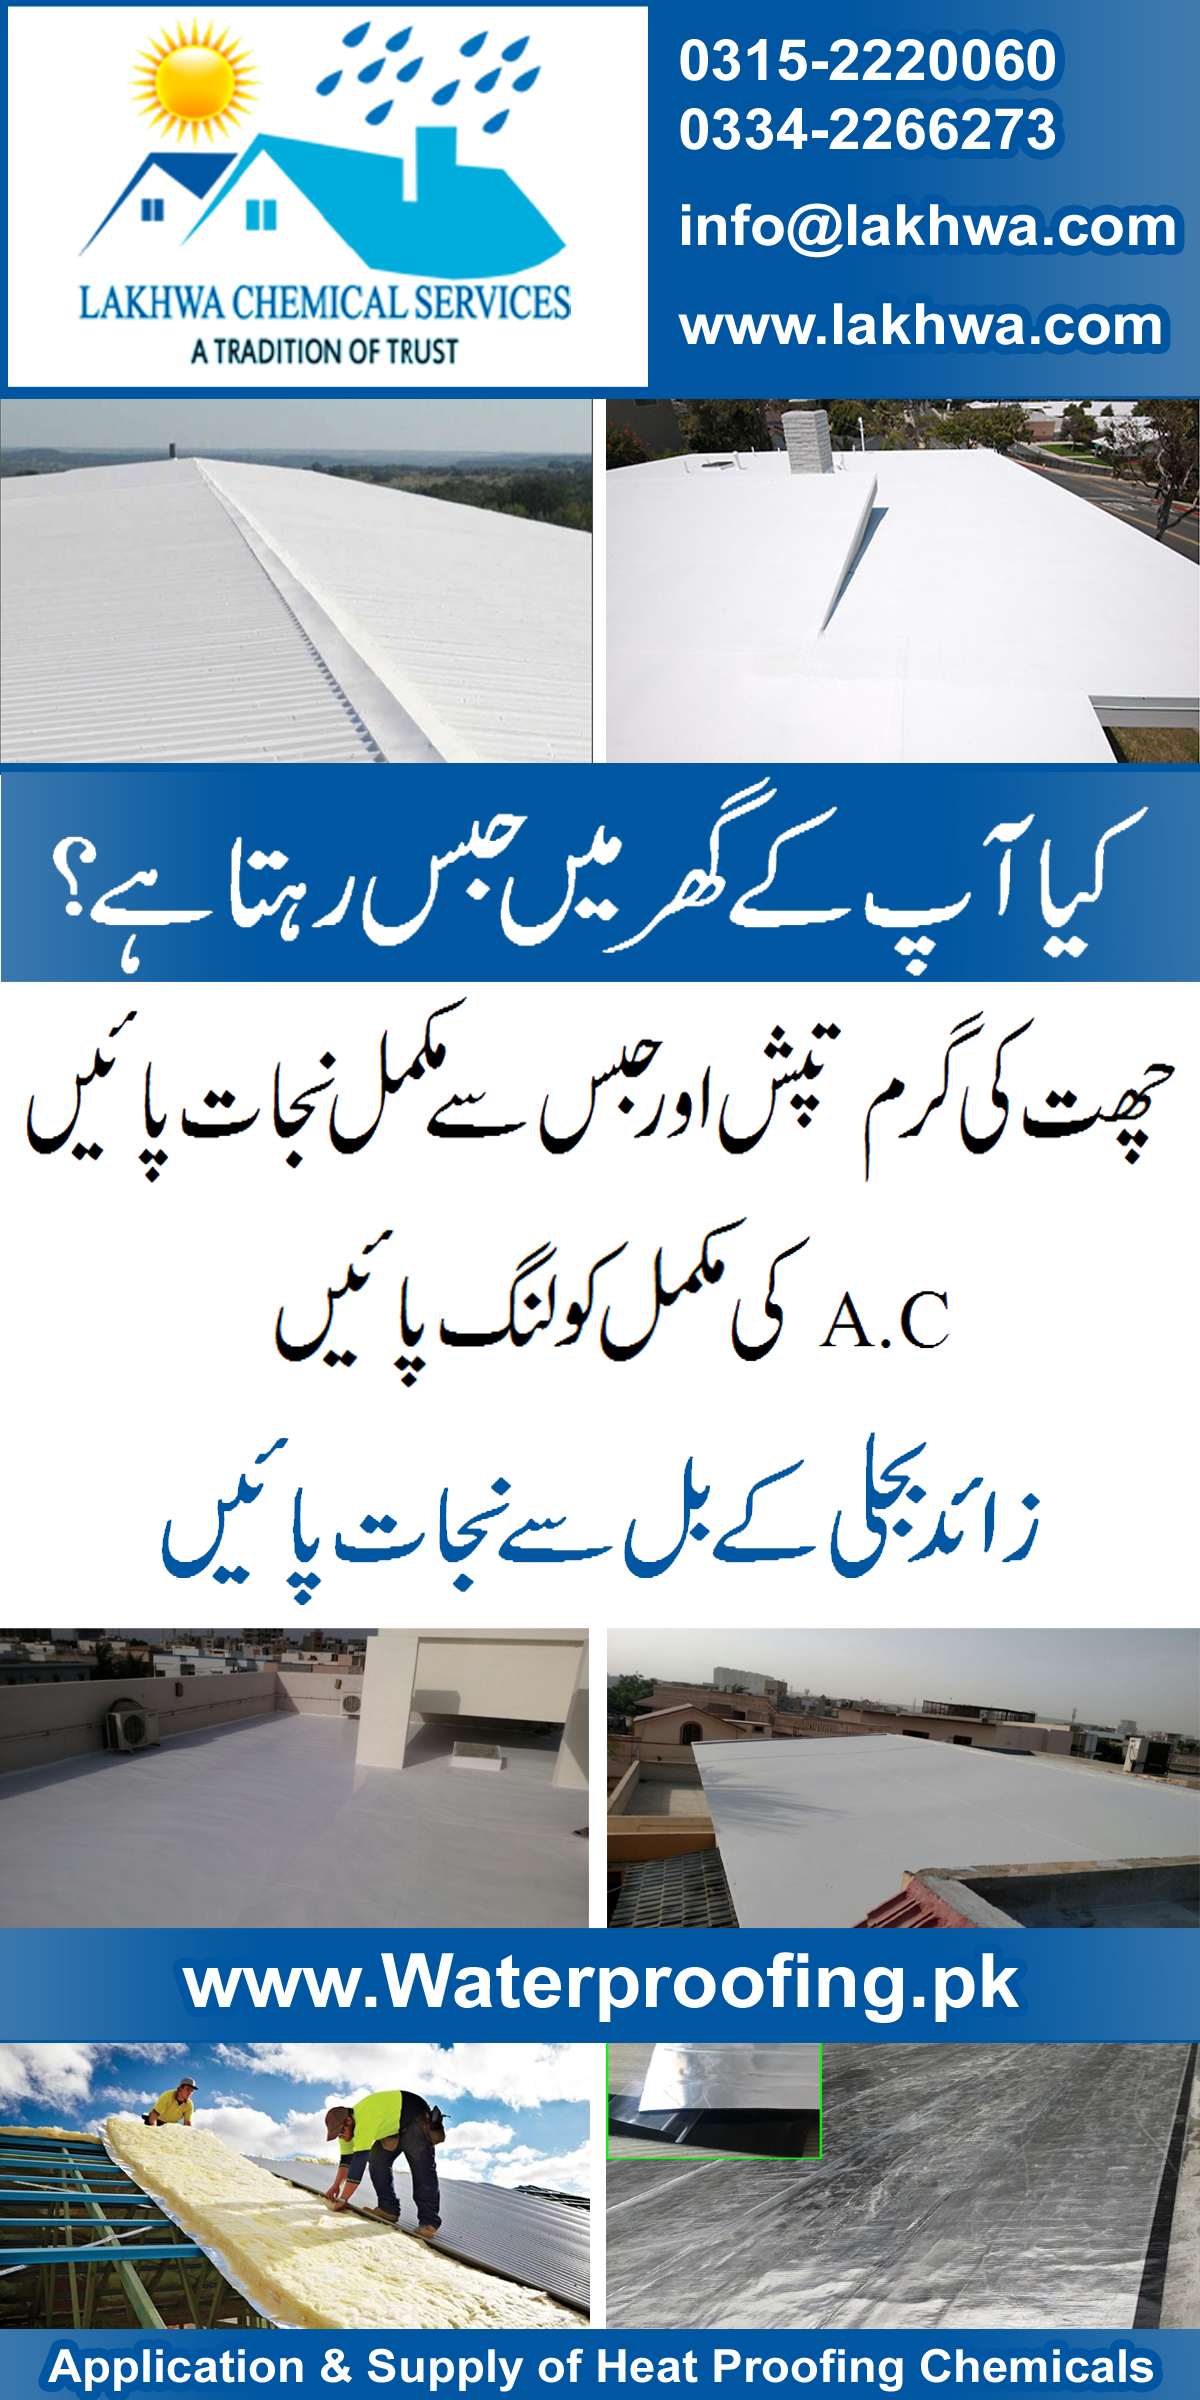 Heat Proofing Services in Karachi | heat proofing services in Pakistan | lakhwa chemical services